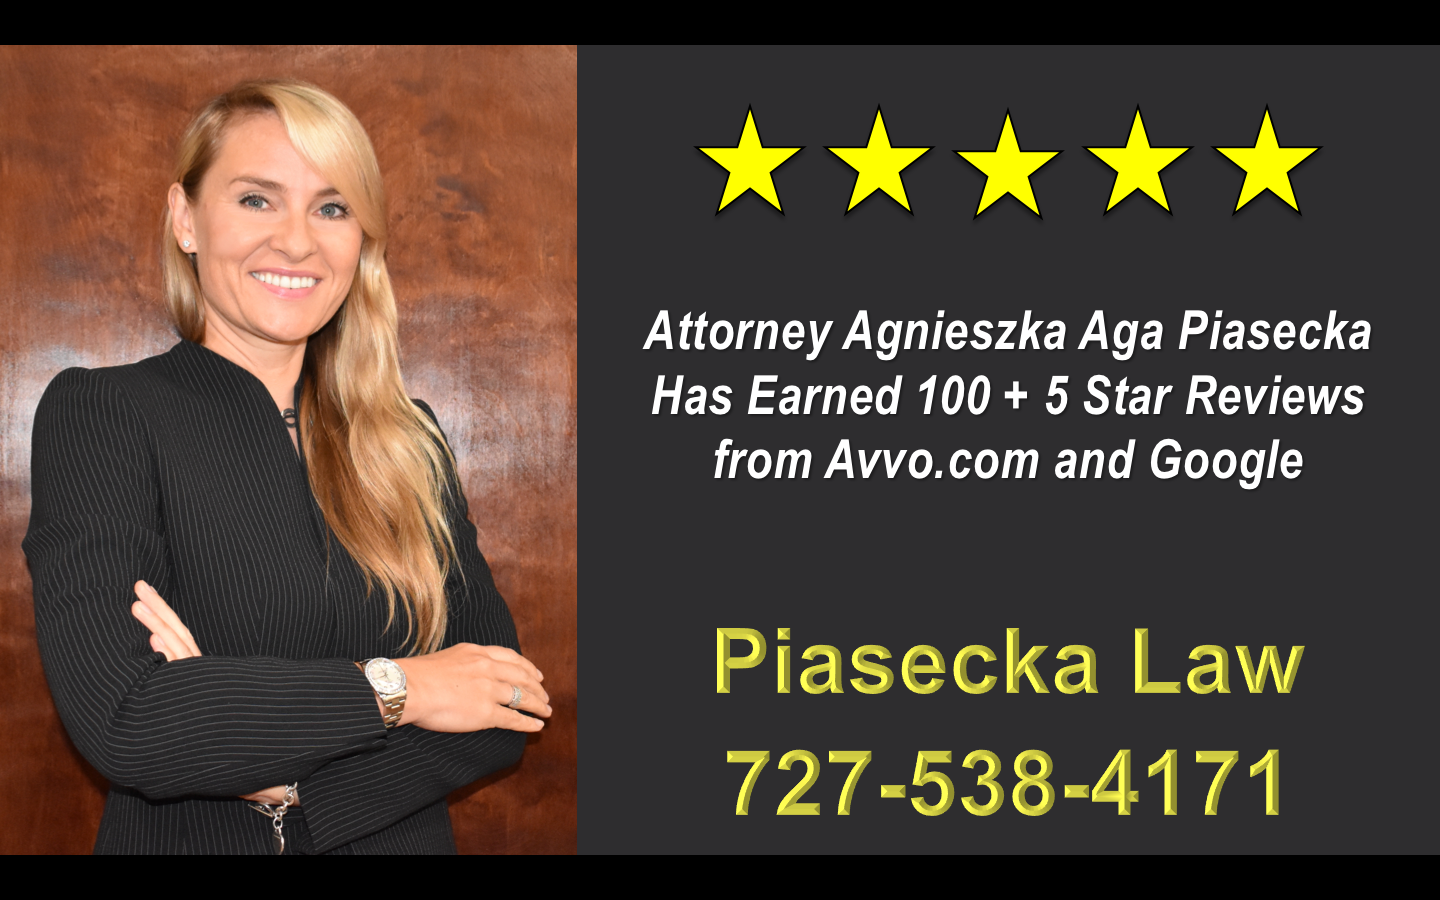 Wills, Trusts, Clearwater, Florida, Lawyer, Attorney, Agnieszka, Aga, Piasecka, Reviews